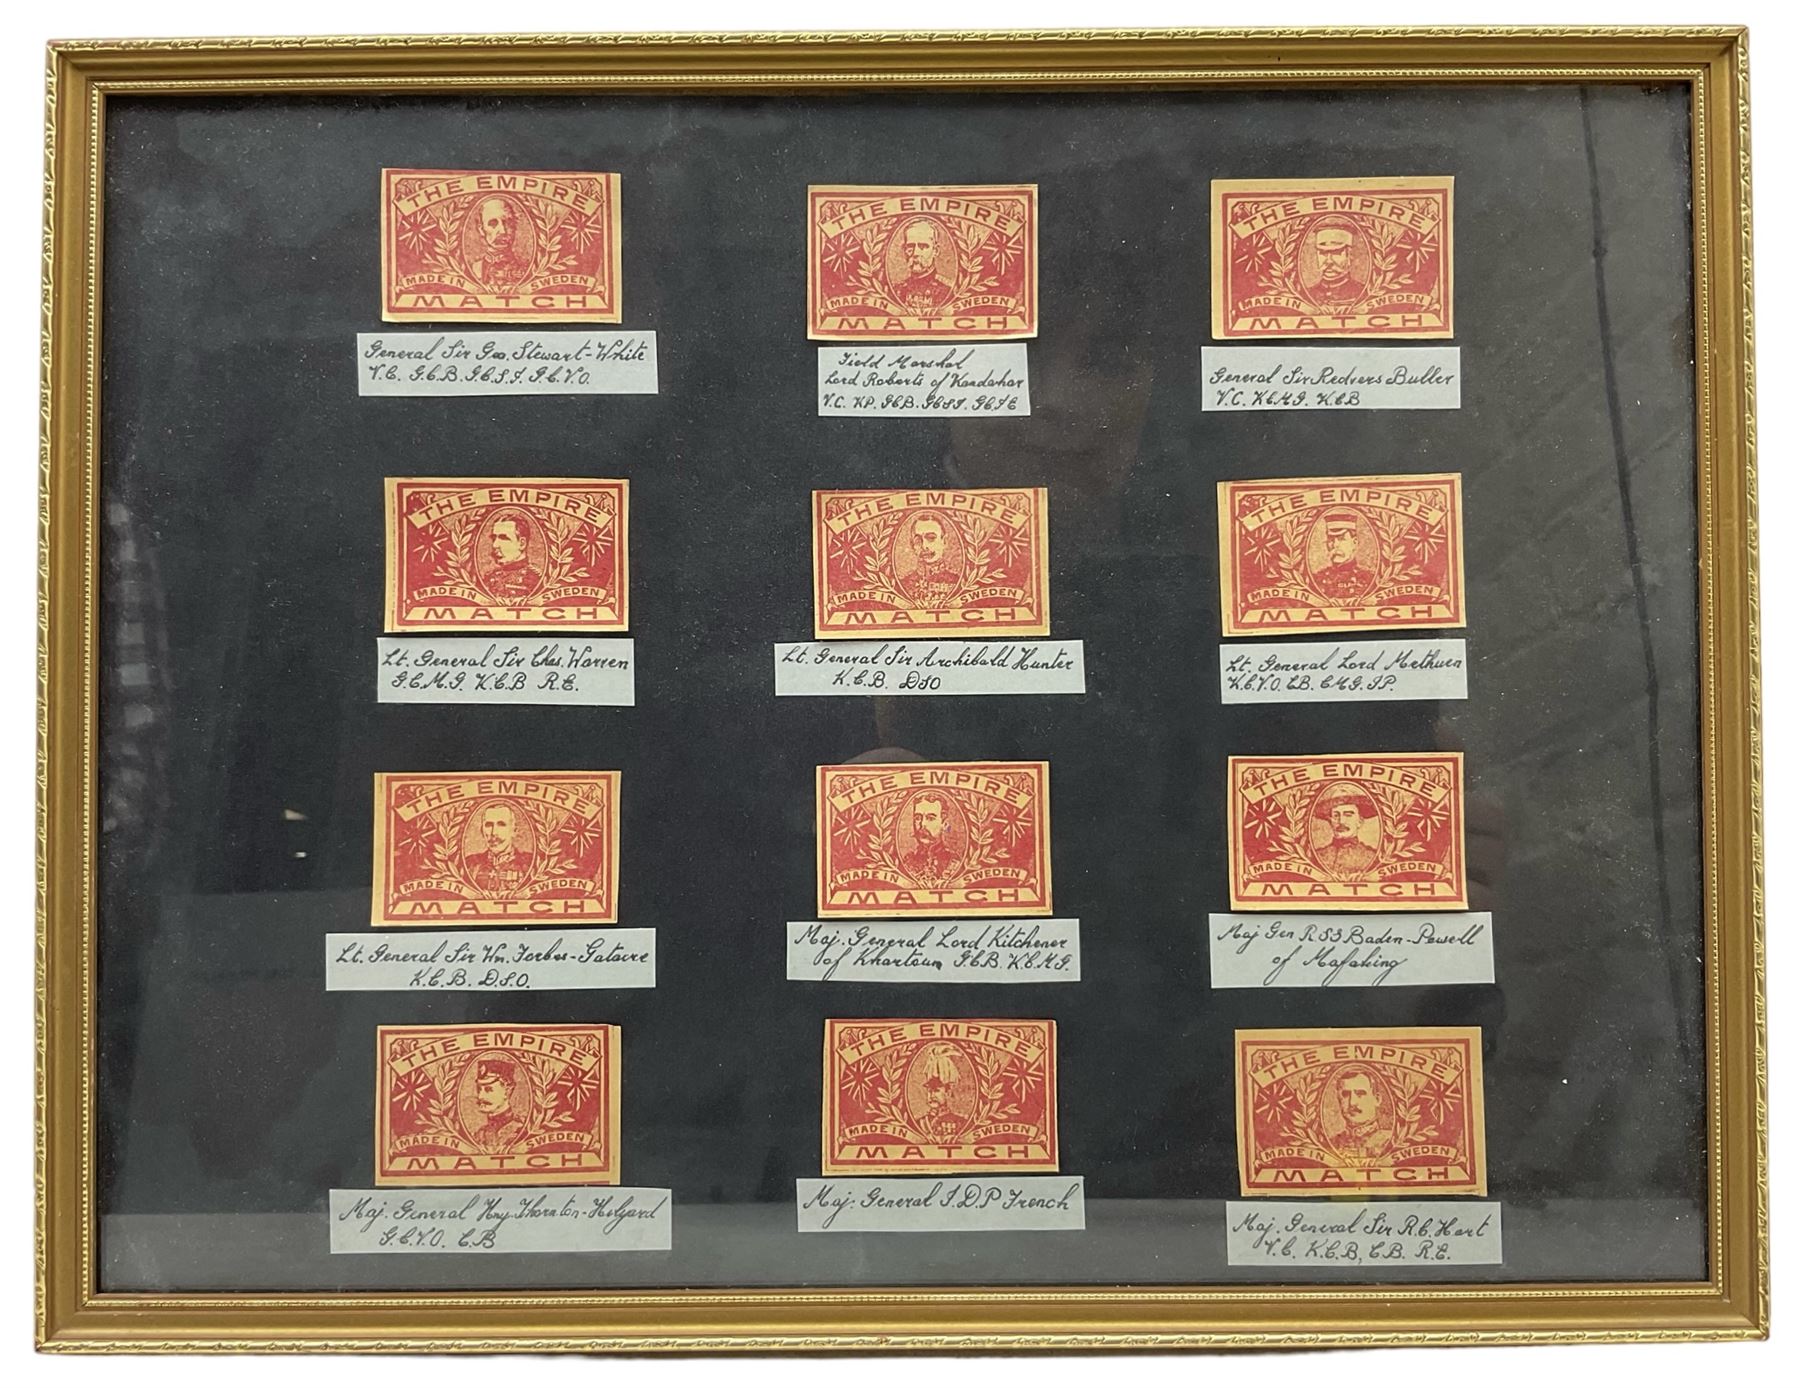 Framed display of twelve The Empire Match matchbox labels